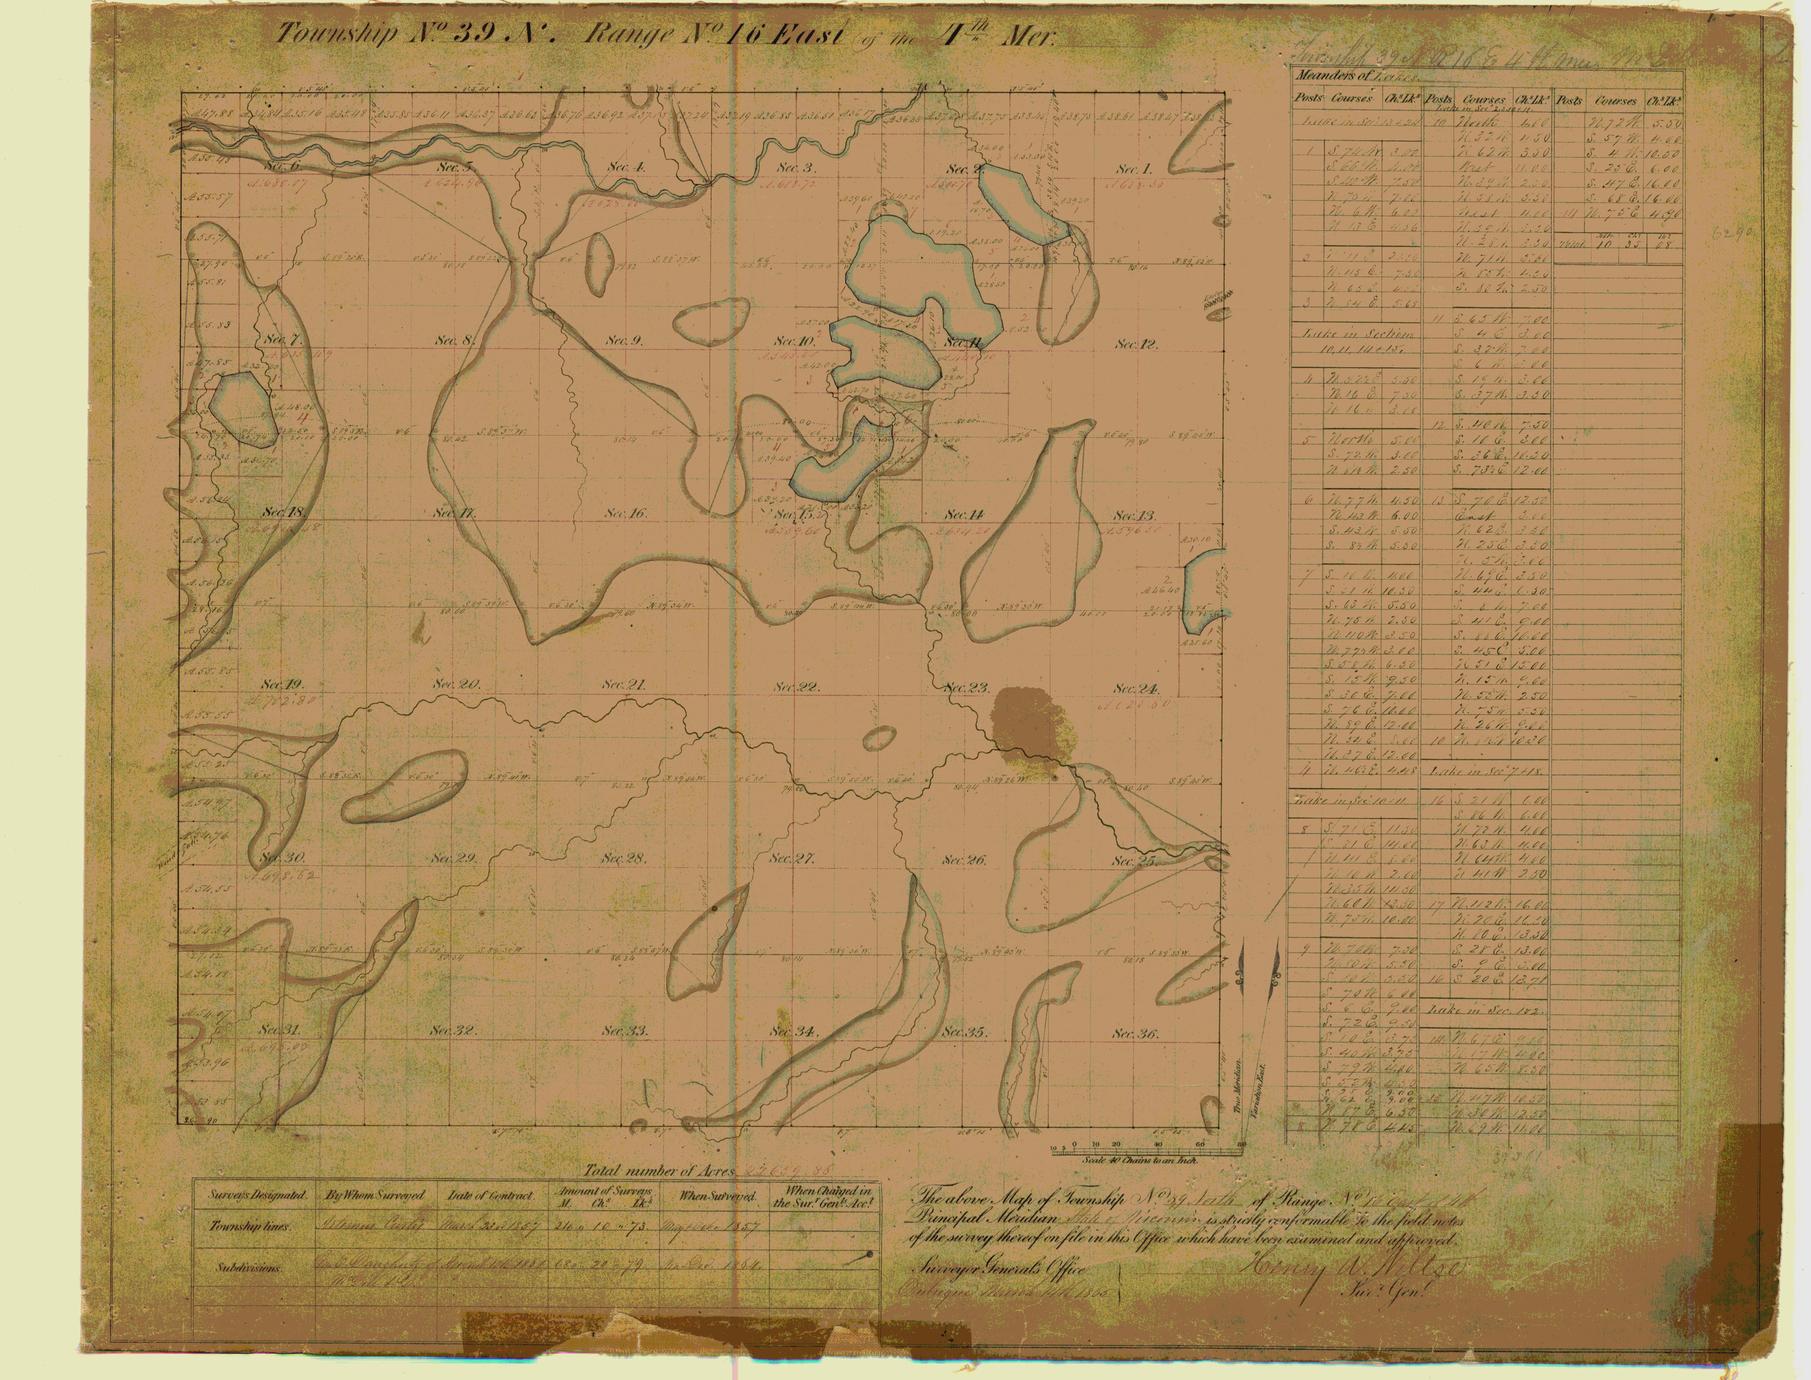 [Public Land Survey System map: Wisconsin Township 39 North, Range 16 East]